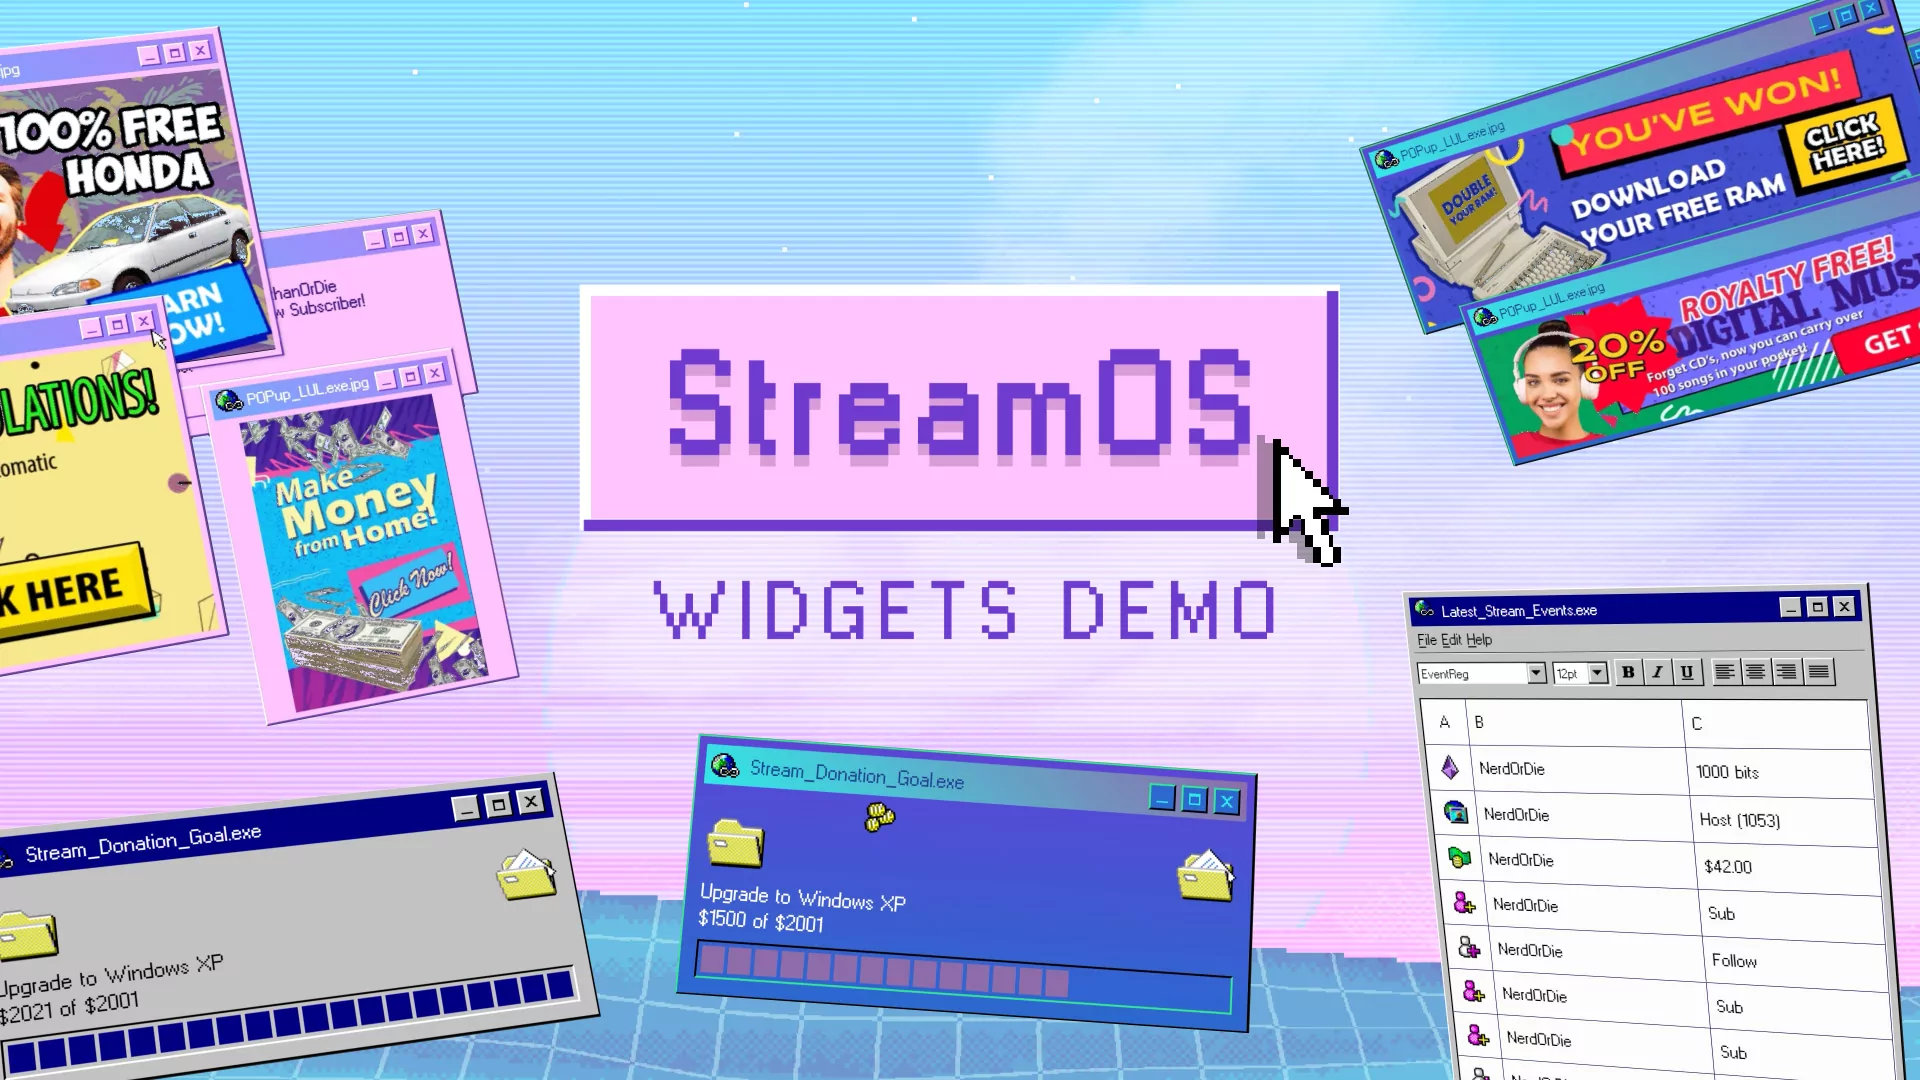 StreamOS Widgets Demo